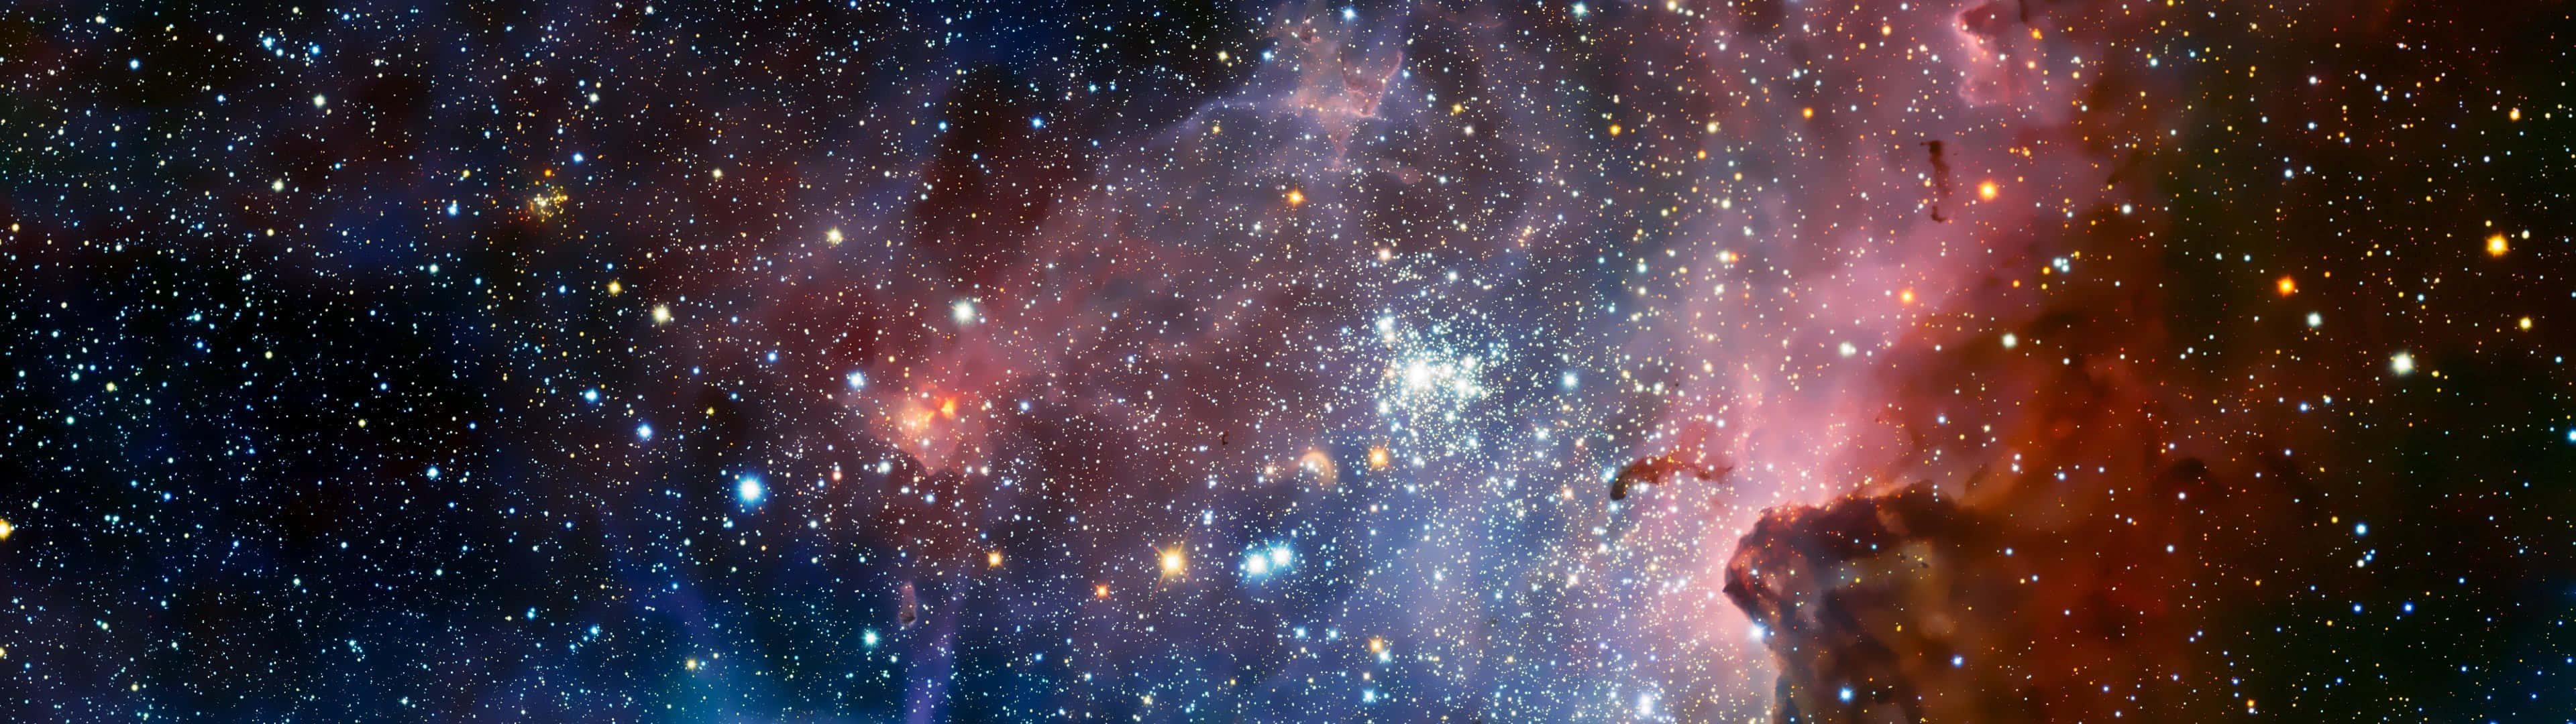 Space Hd 3840x1080 Galaxy Wallpaper